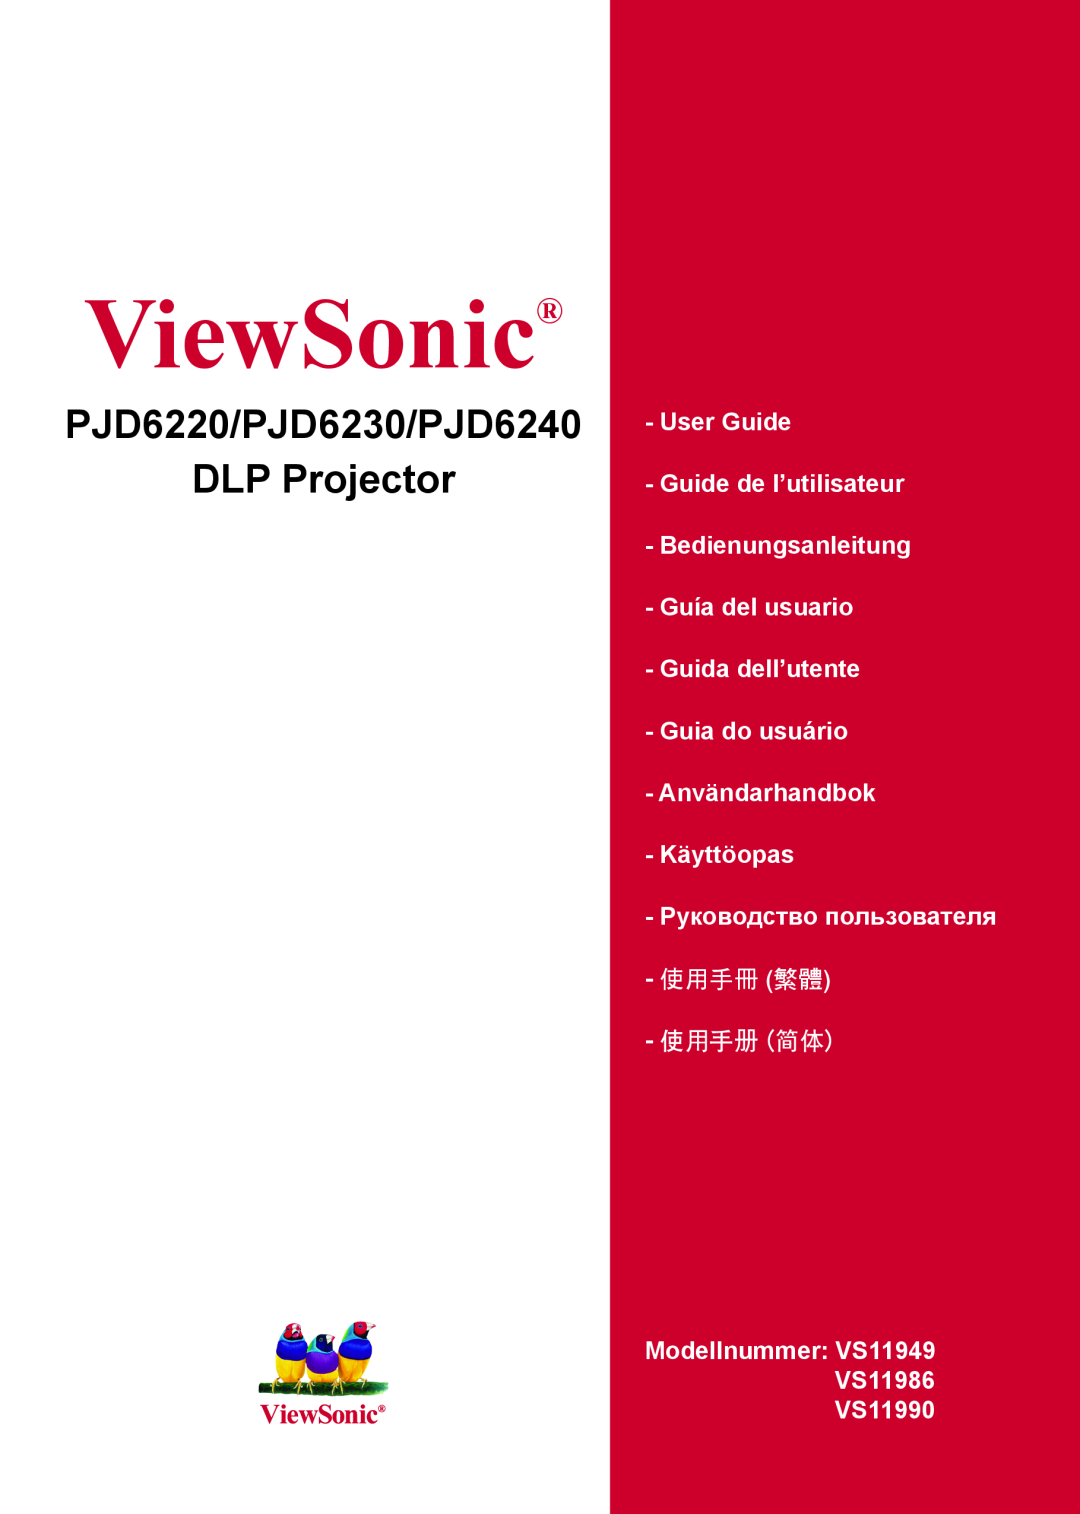 ViewSonic VS11986, VS11990, VS11949 warranty ViewSonic, PJ557DC/PJ559DC/PJ560DC, DLP Projector, 使用手冊 繁體, 使用手冊 簡體, 사용자 안내서 